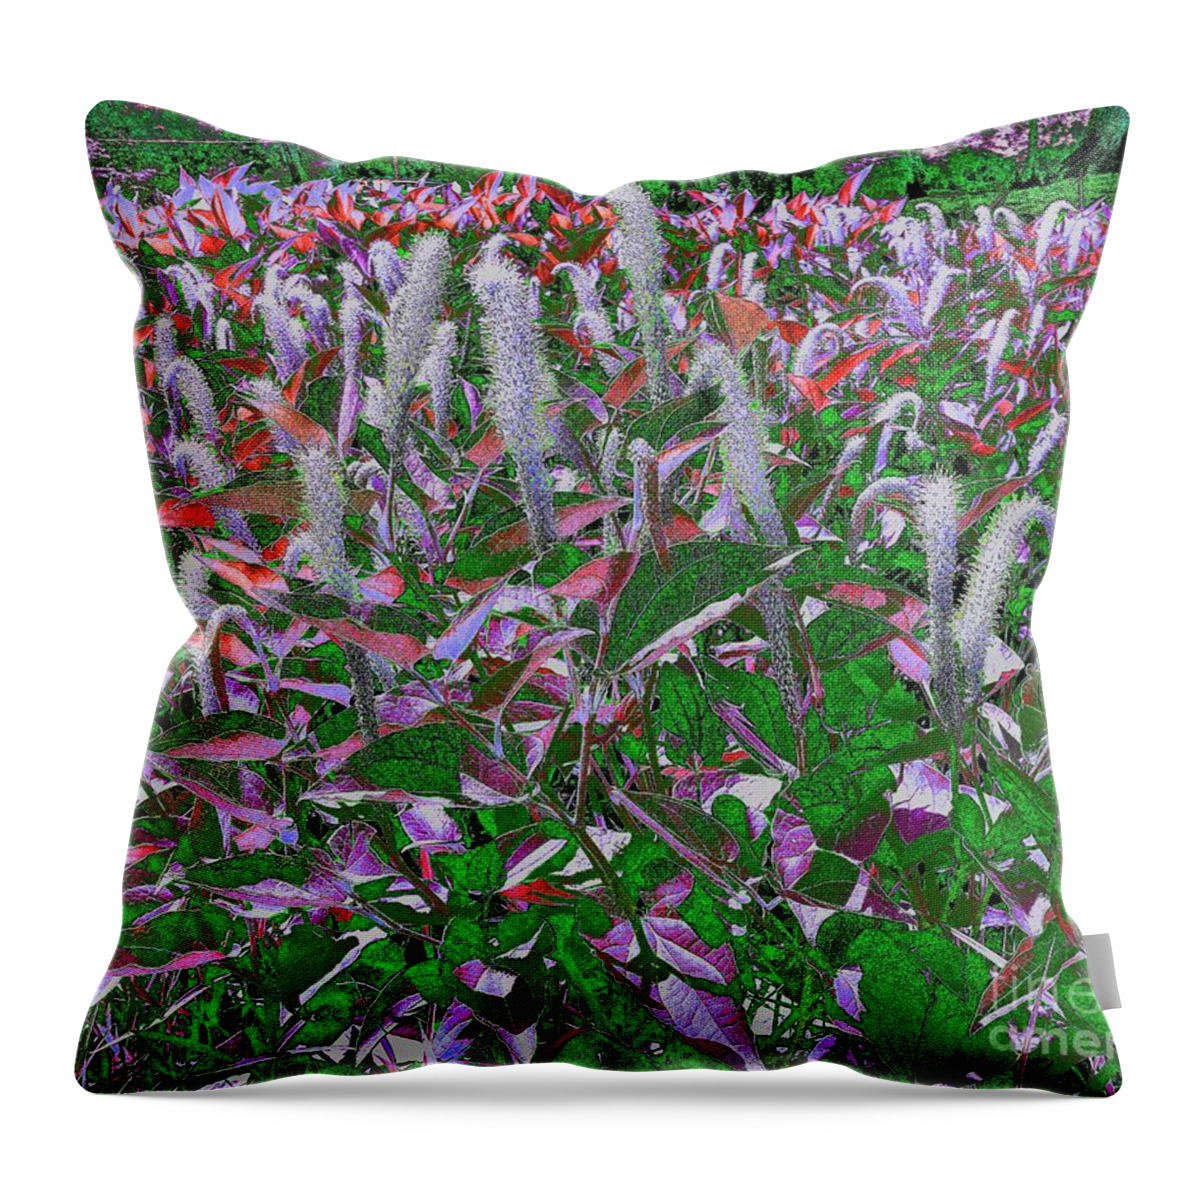 Abstract Throw Pillow featuring the digital art Vision Show by Rachel Hannah